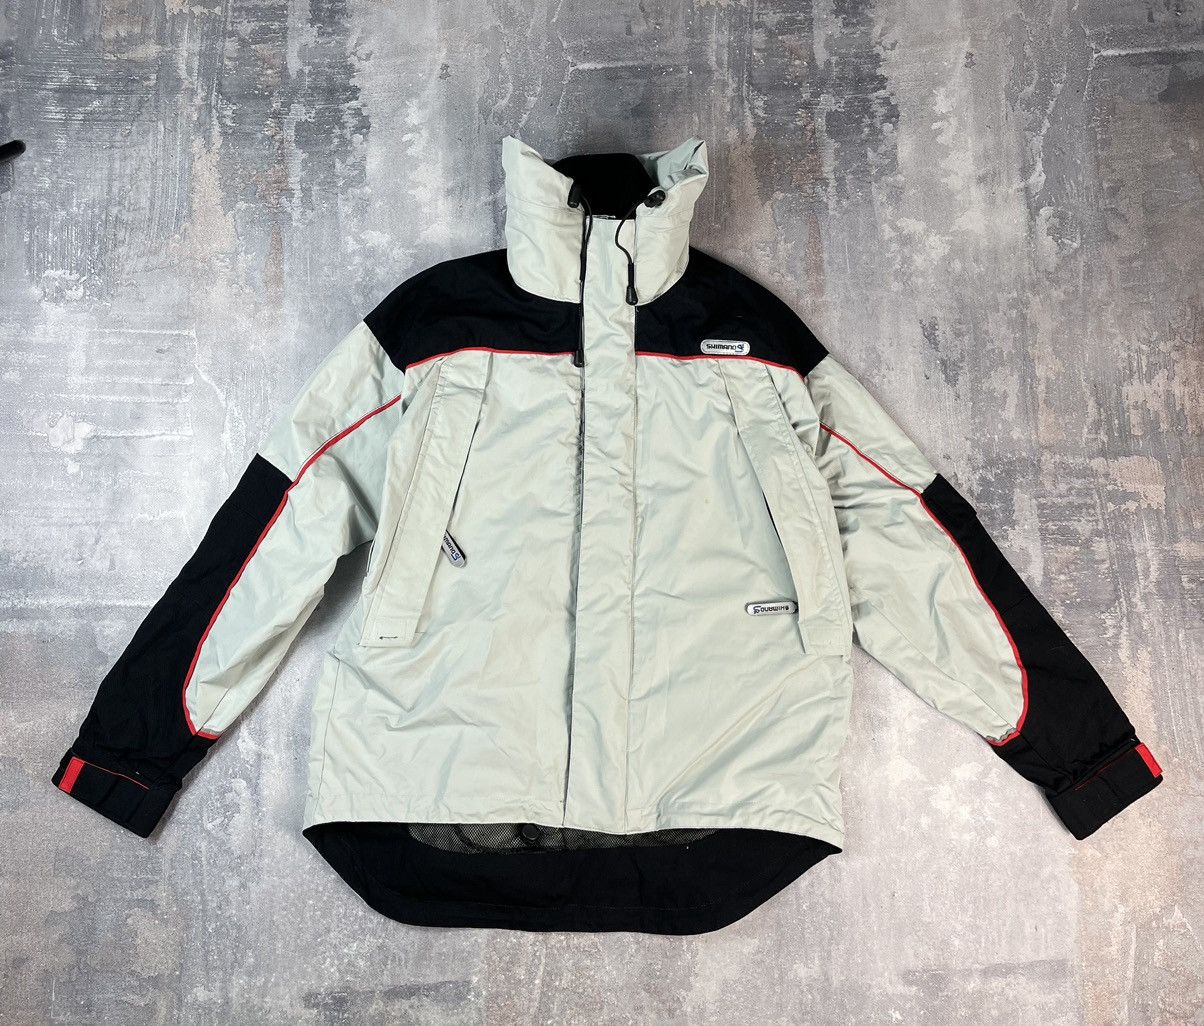 Sports Specialties Shimano nexus hyper fishing gear jacket